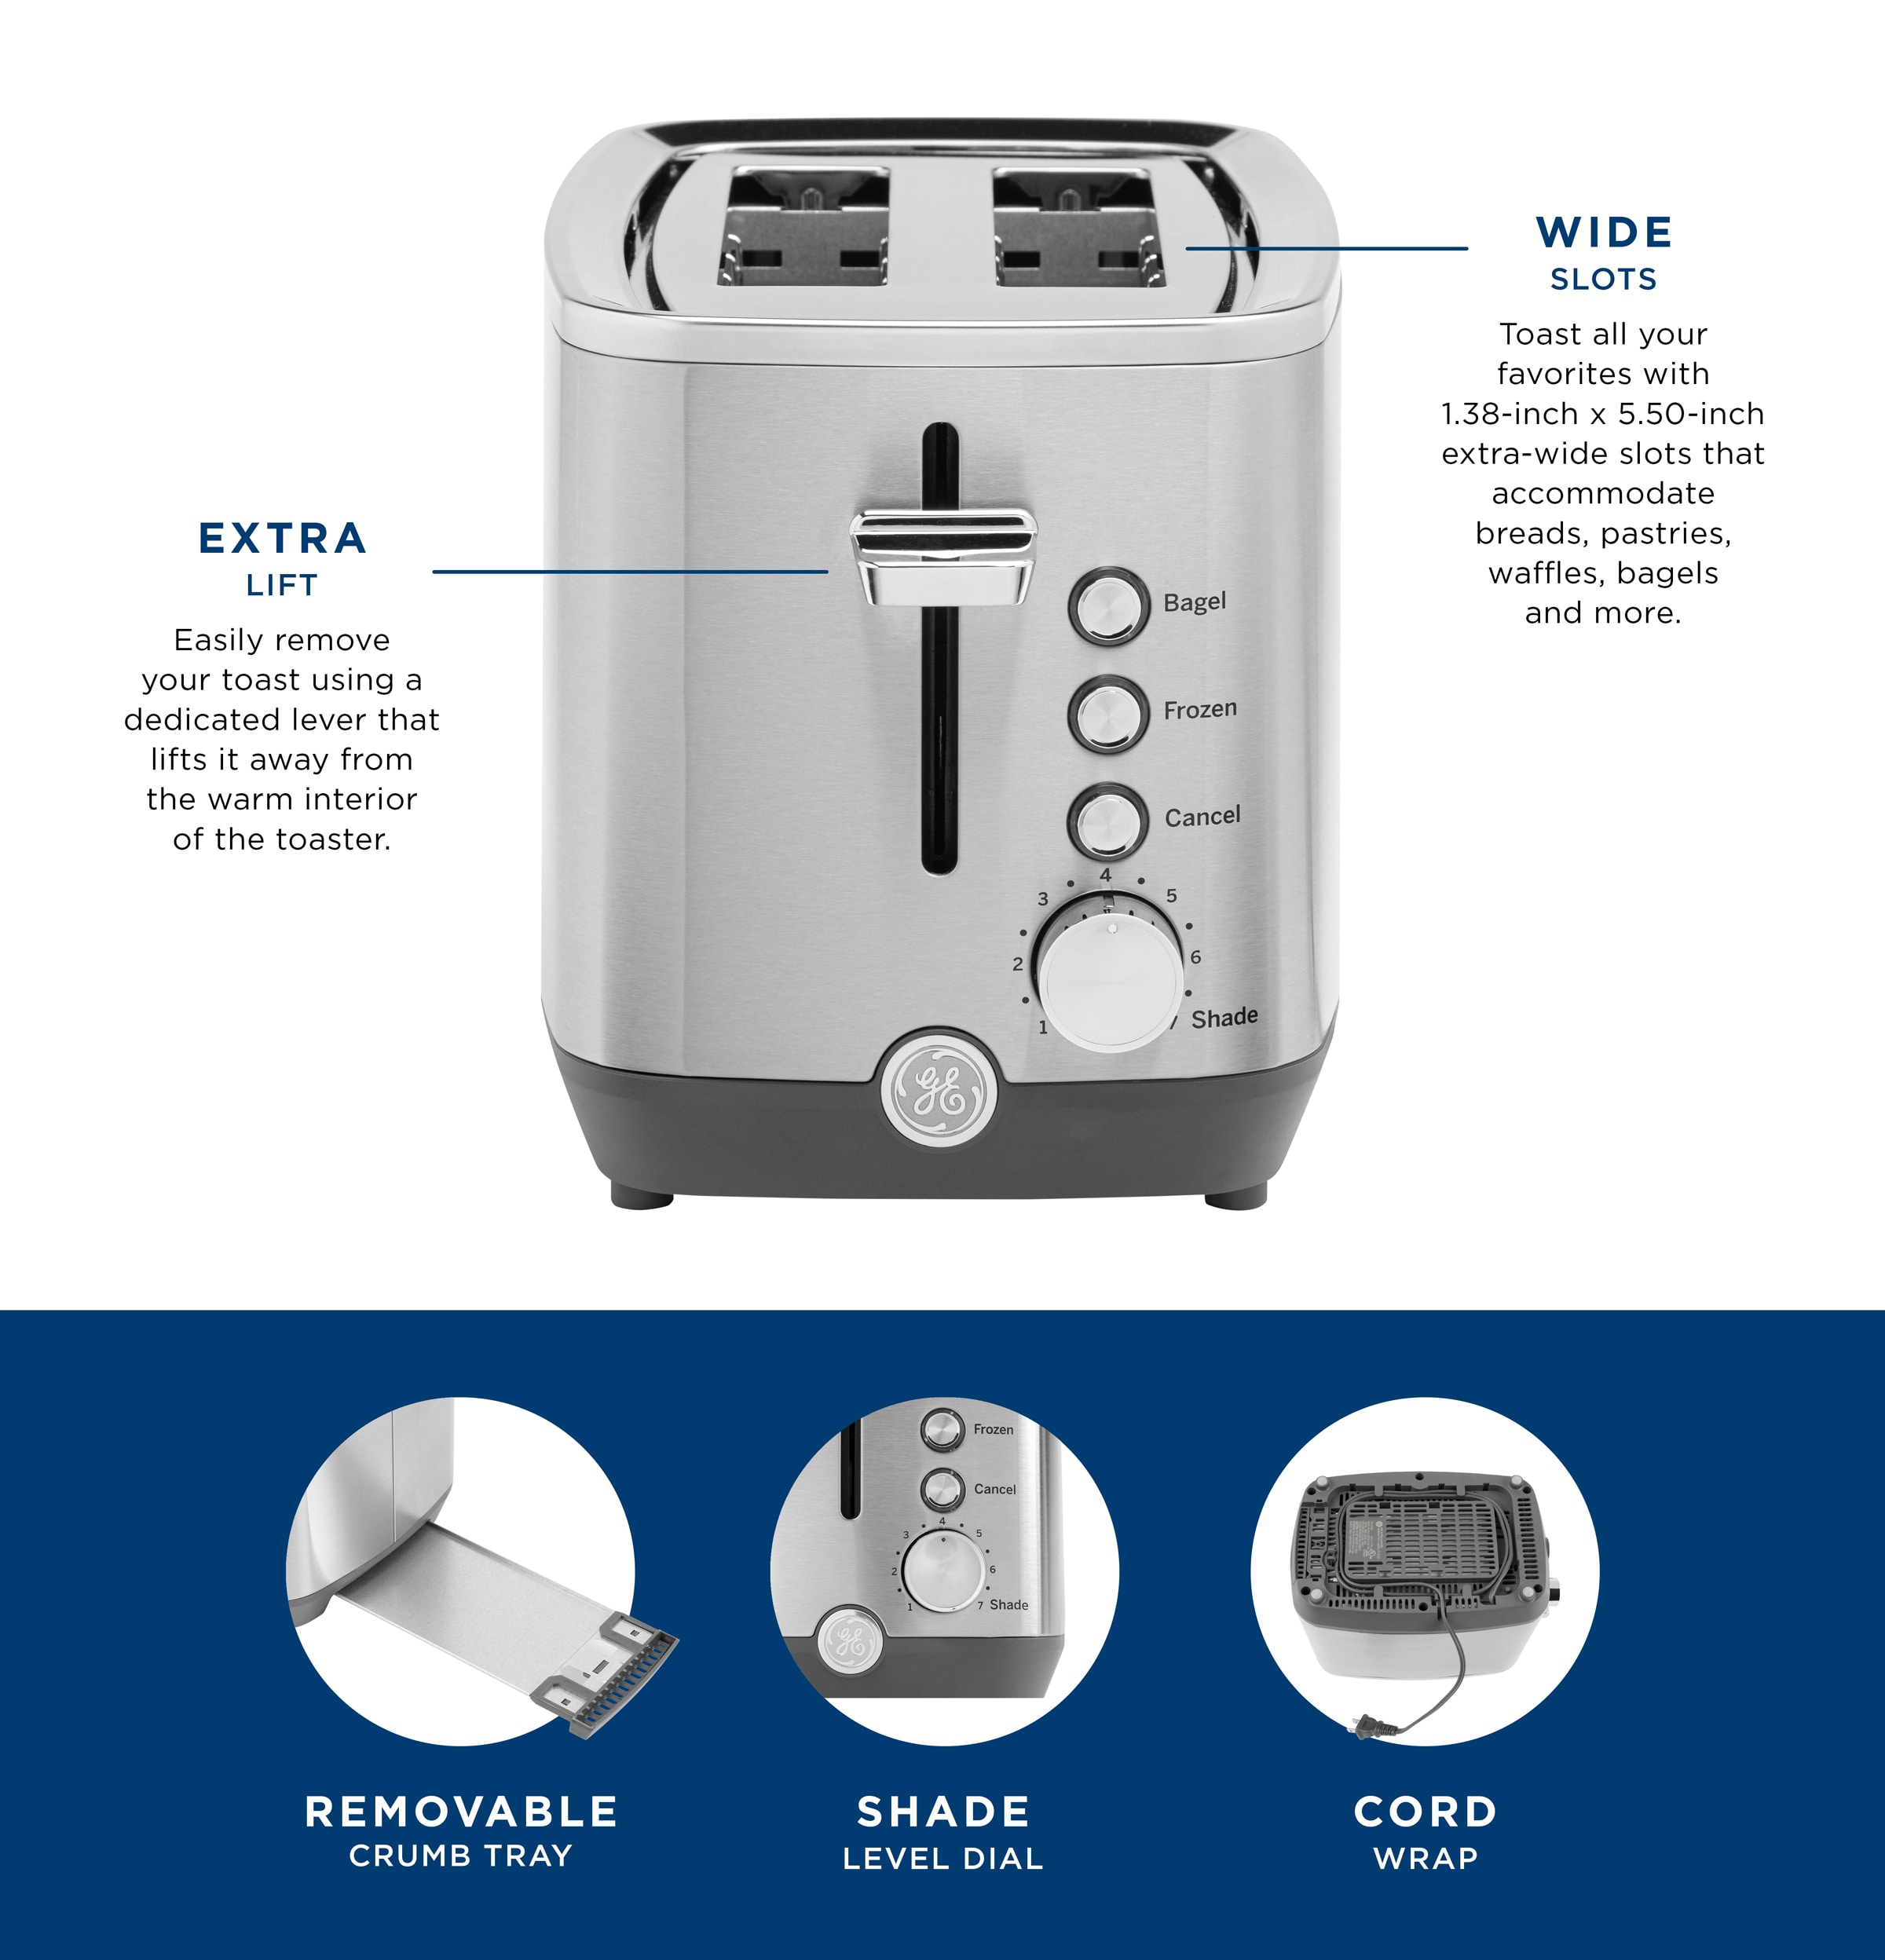 GE Appliances GE 4-Slice Toaster & Reviews